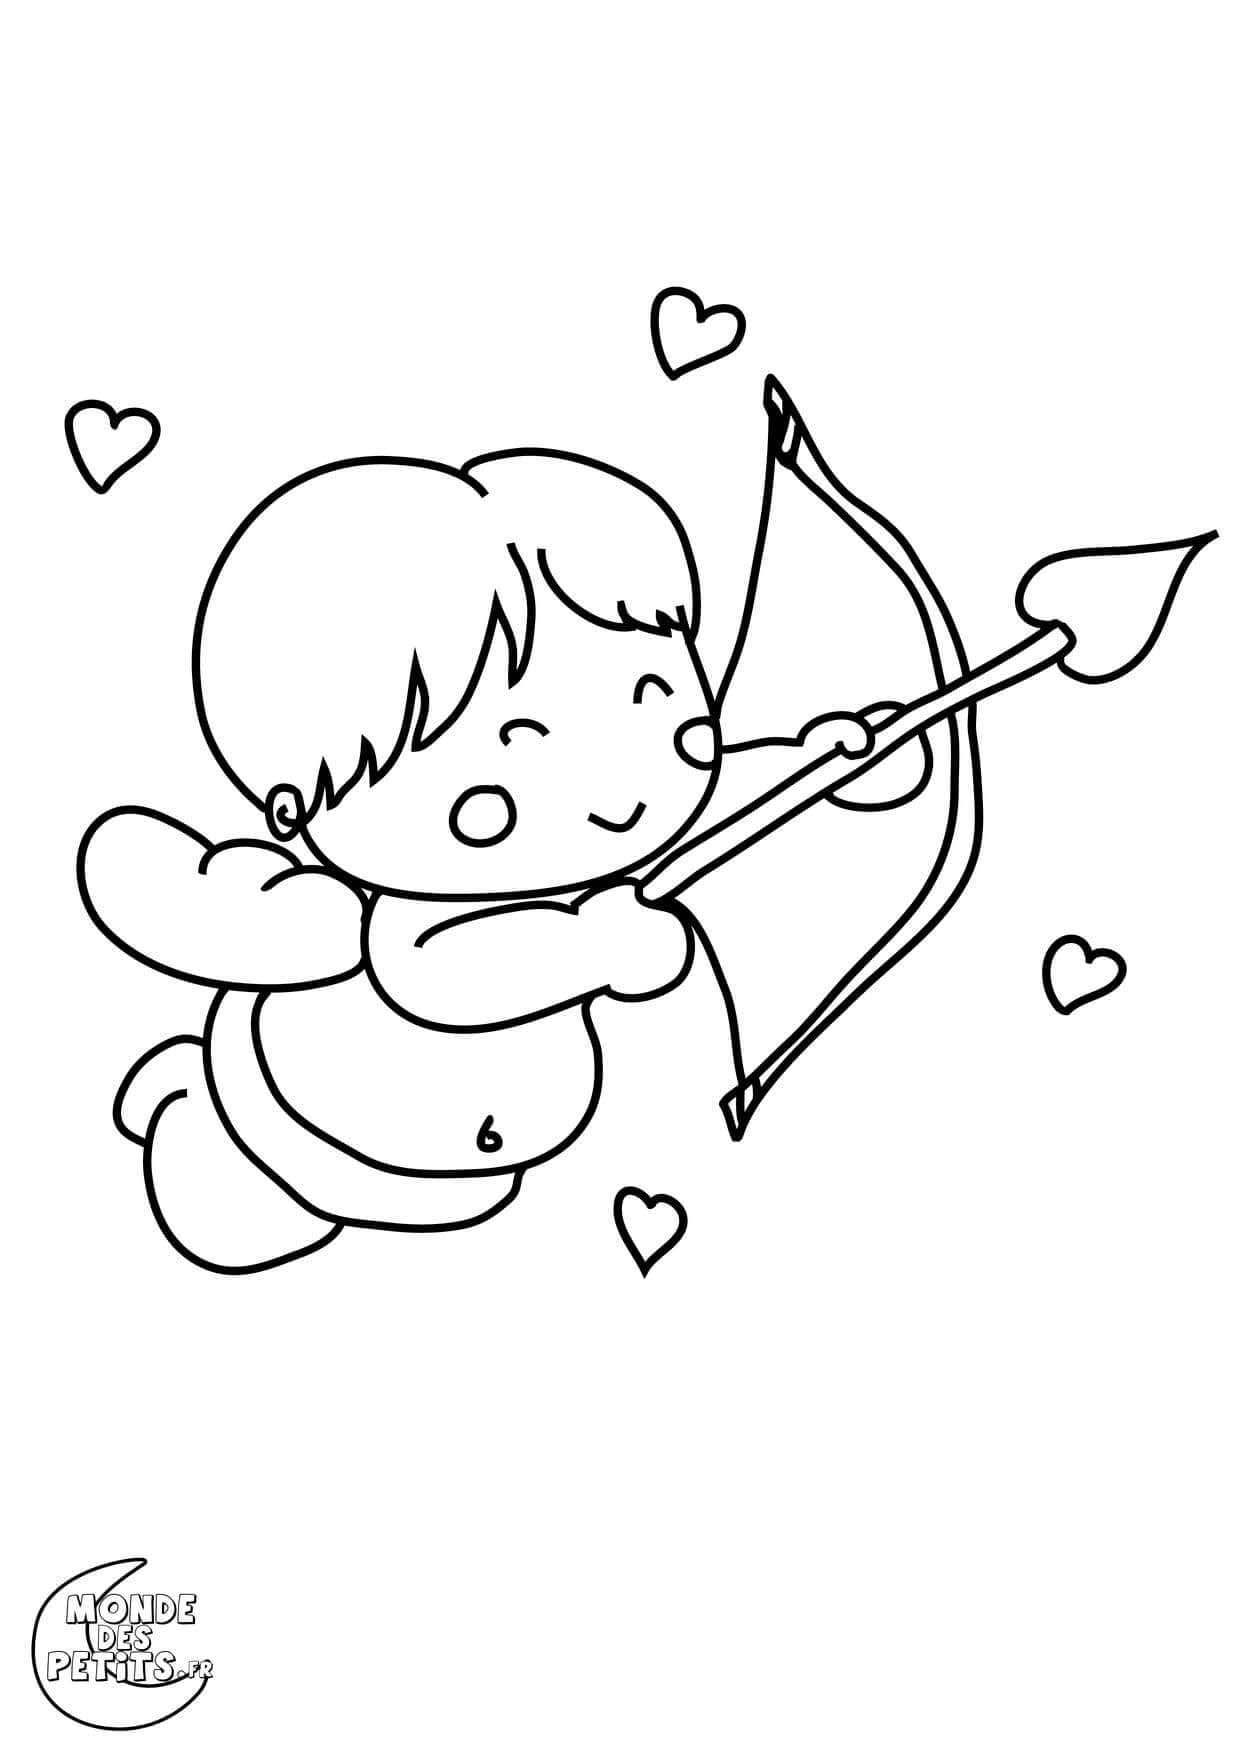 Titounis Cupidon coloring page